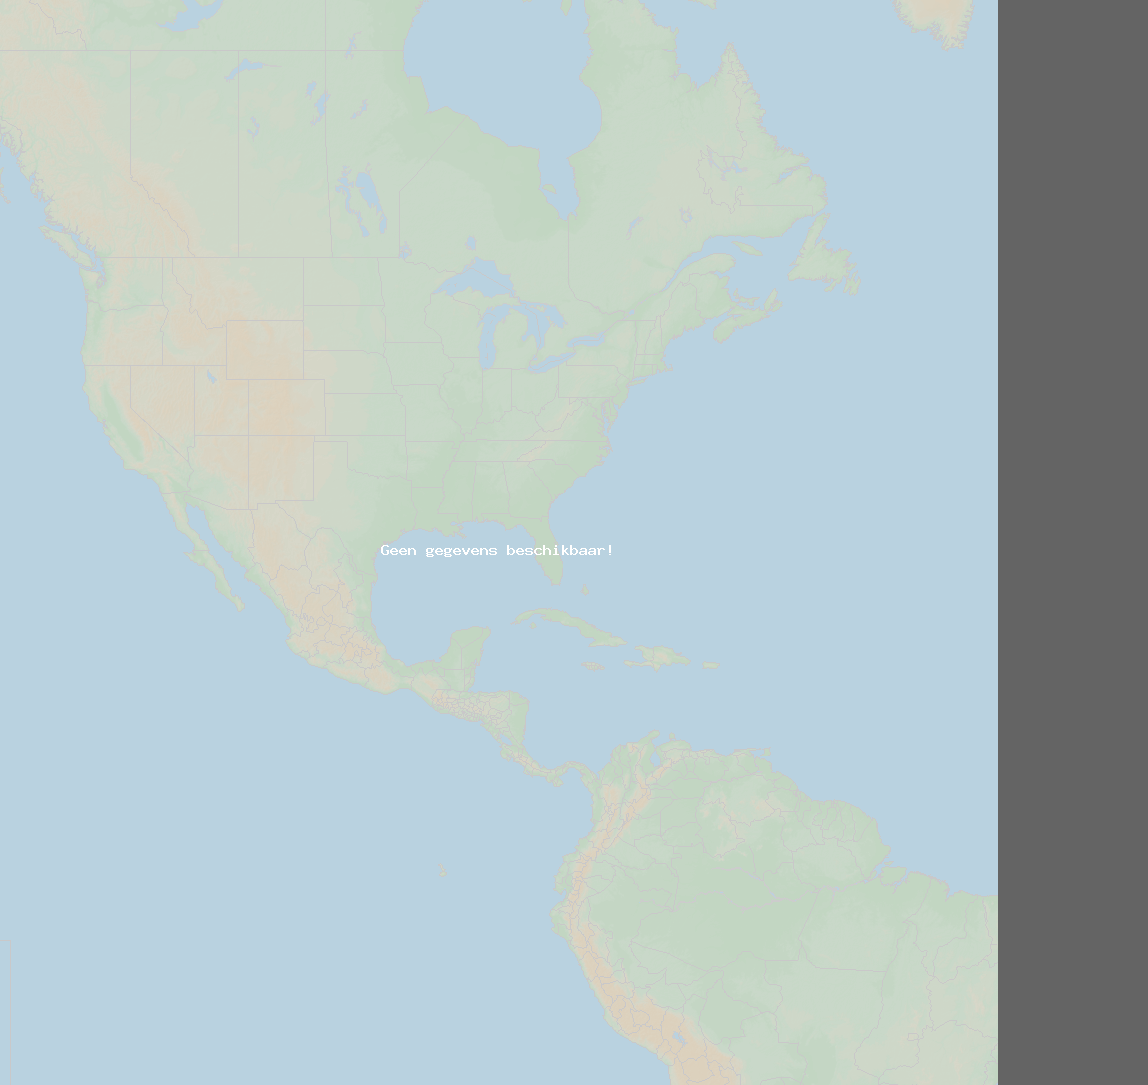 Inslagverhouding (Station Baie-Comeau QC) North America 2019 mei